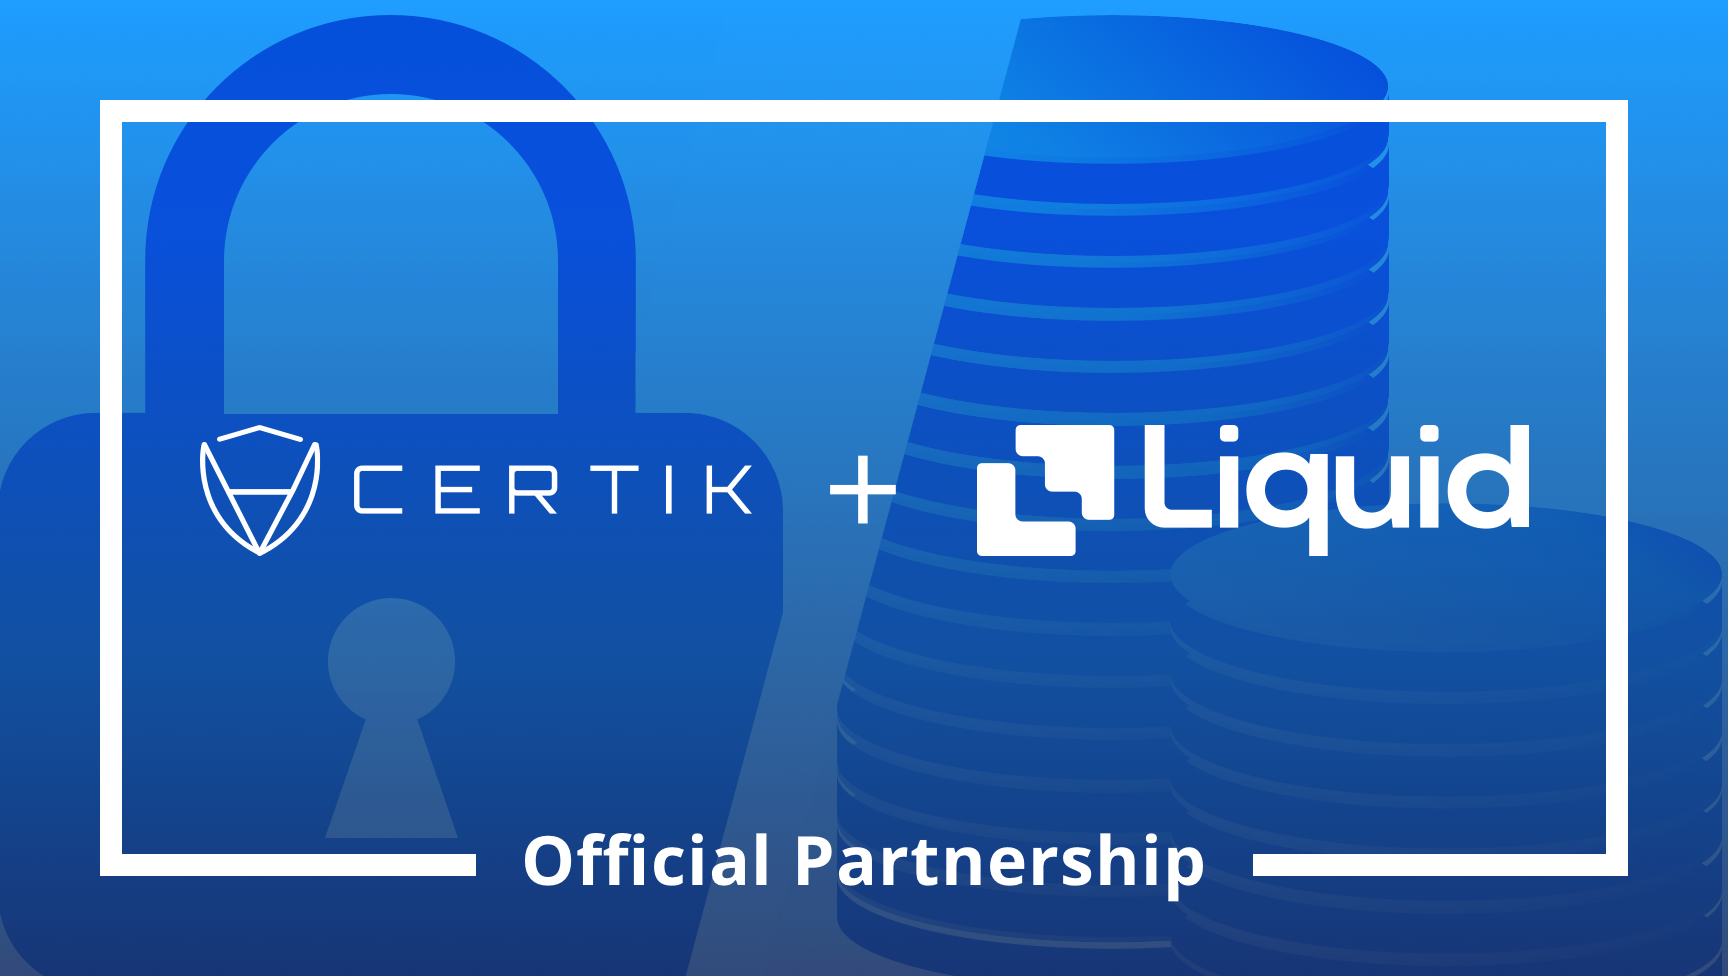 CertiK and Liquid’s Official Partnership